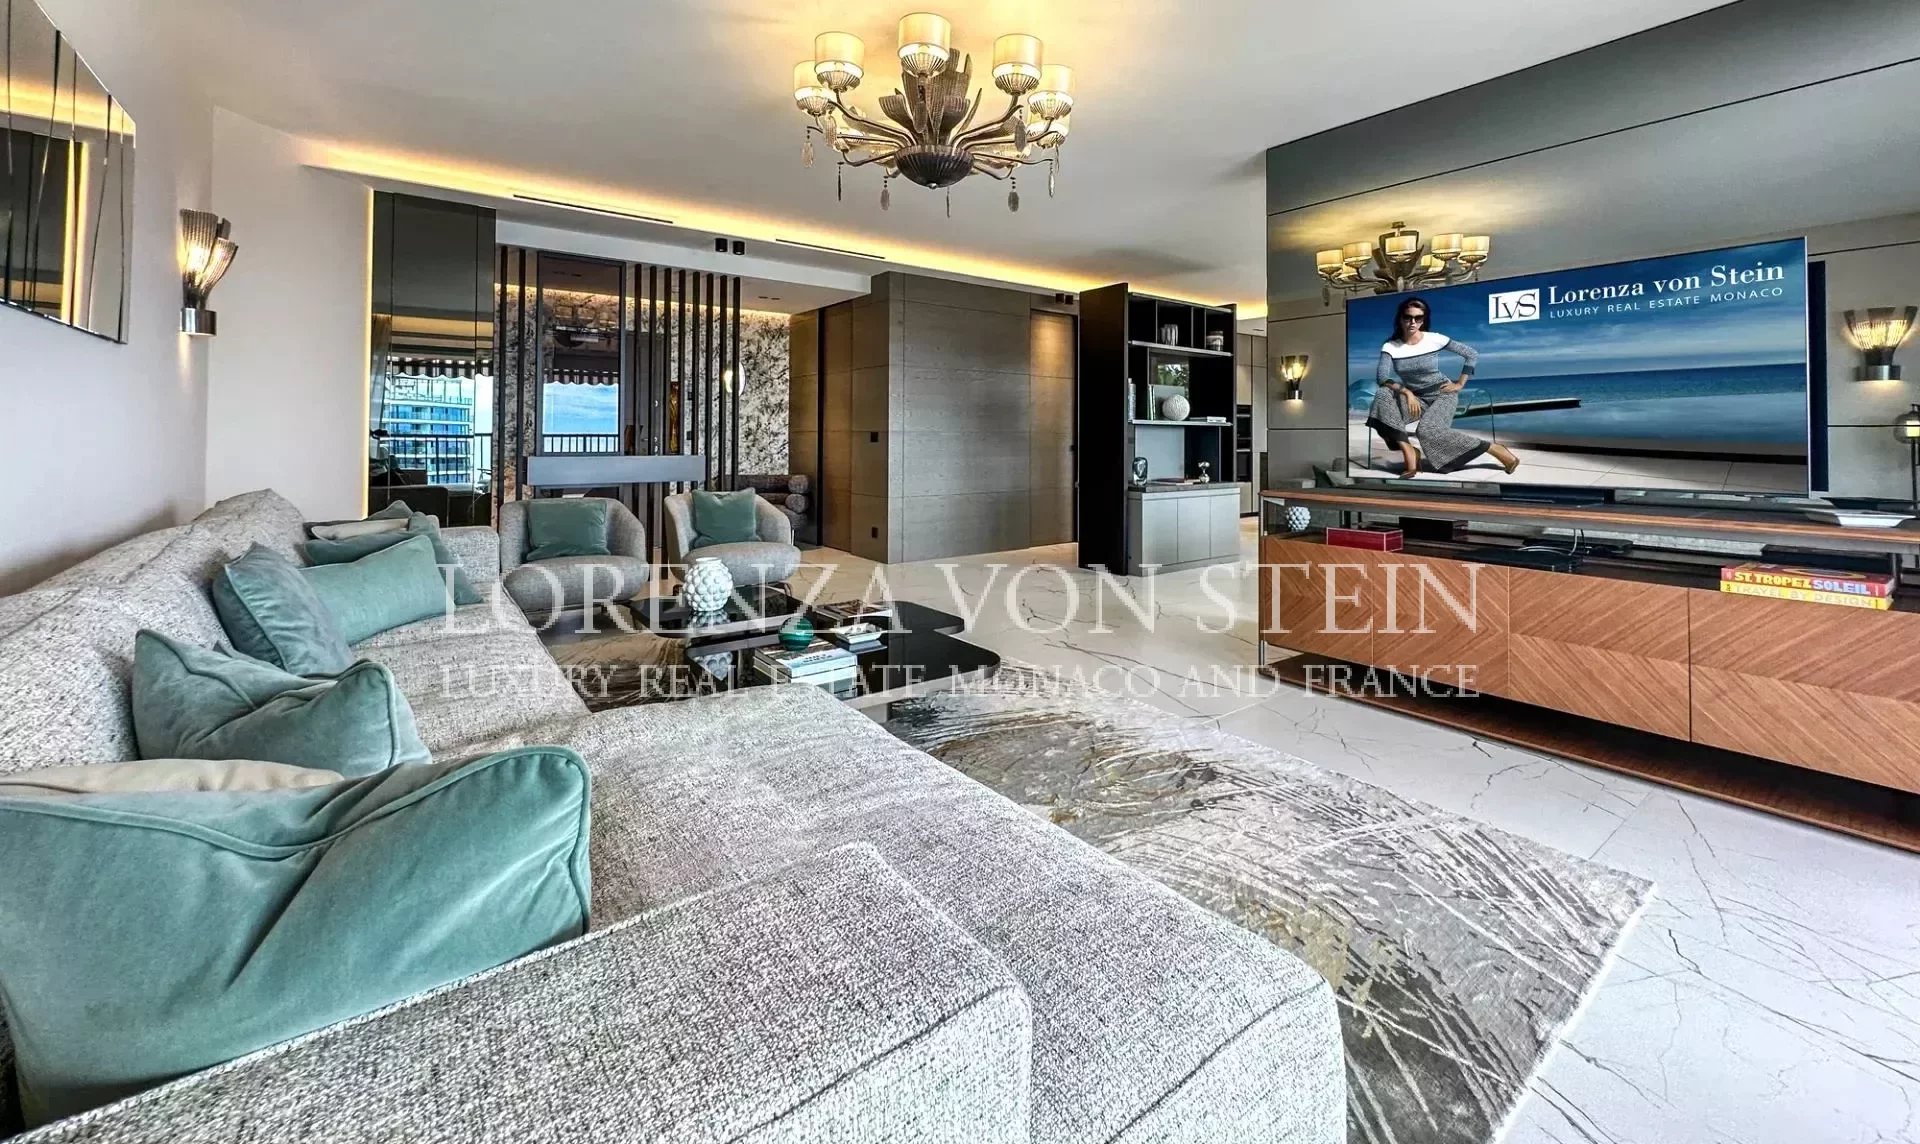 Rented - Turn-key - Luxury furnished apartment